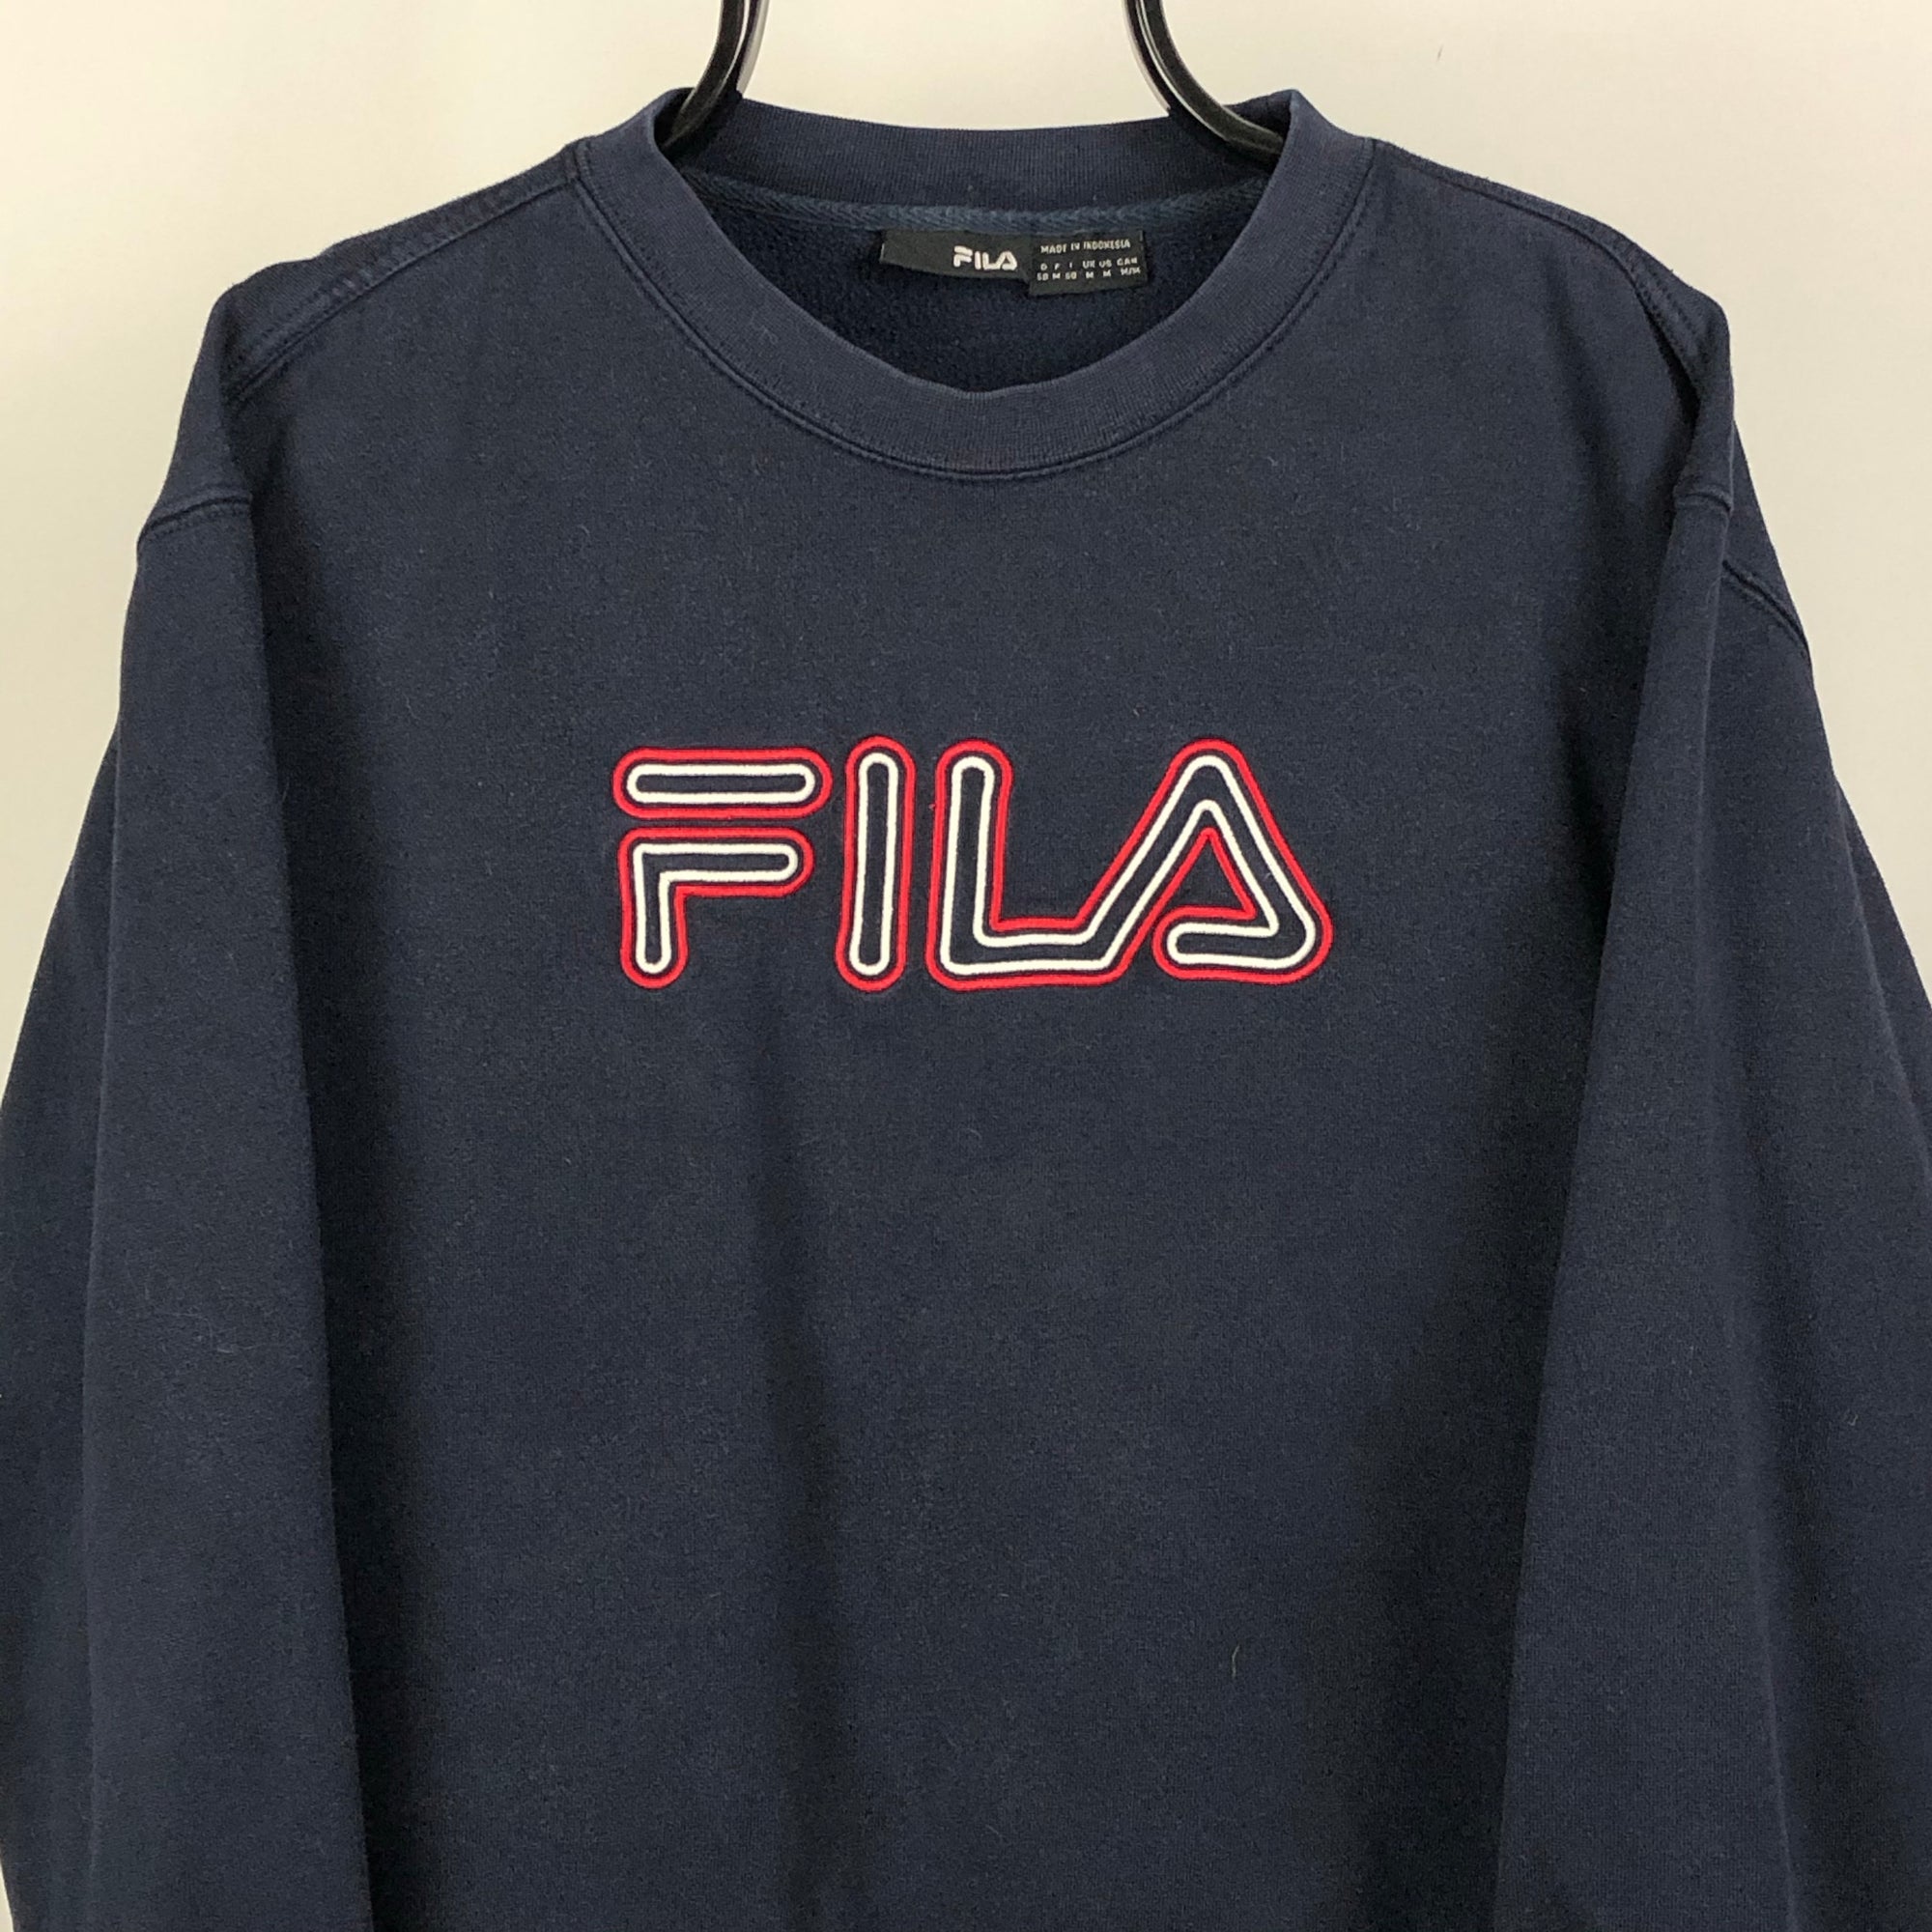 Vintage Fila Sweatshirt in Navy - Men’s Small/Women’s Medium